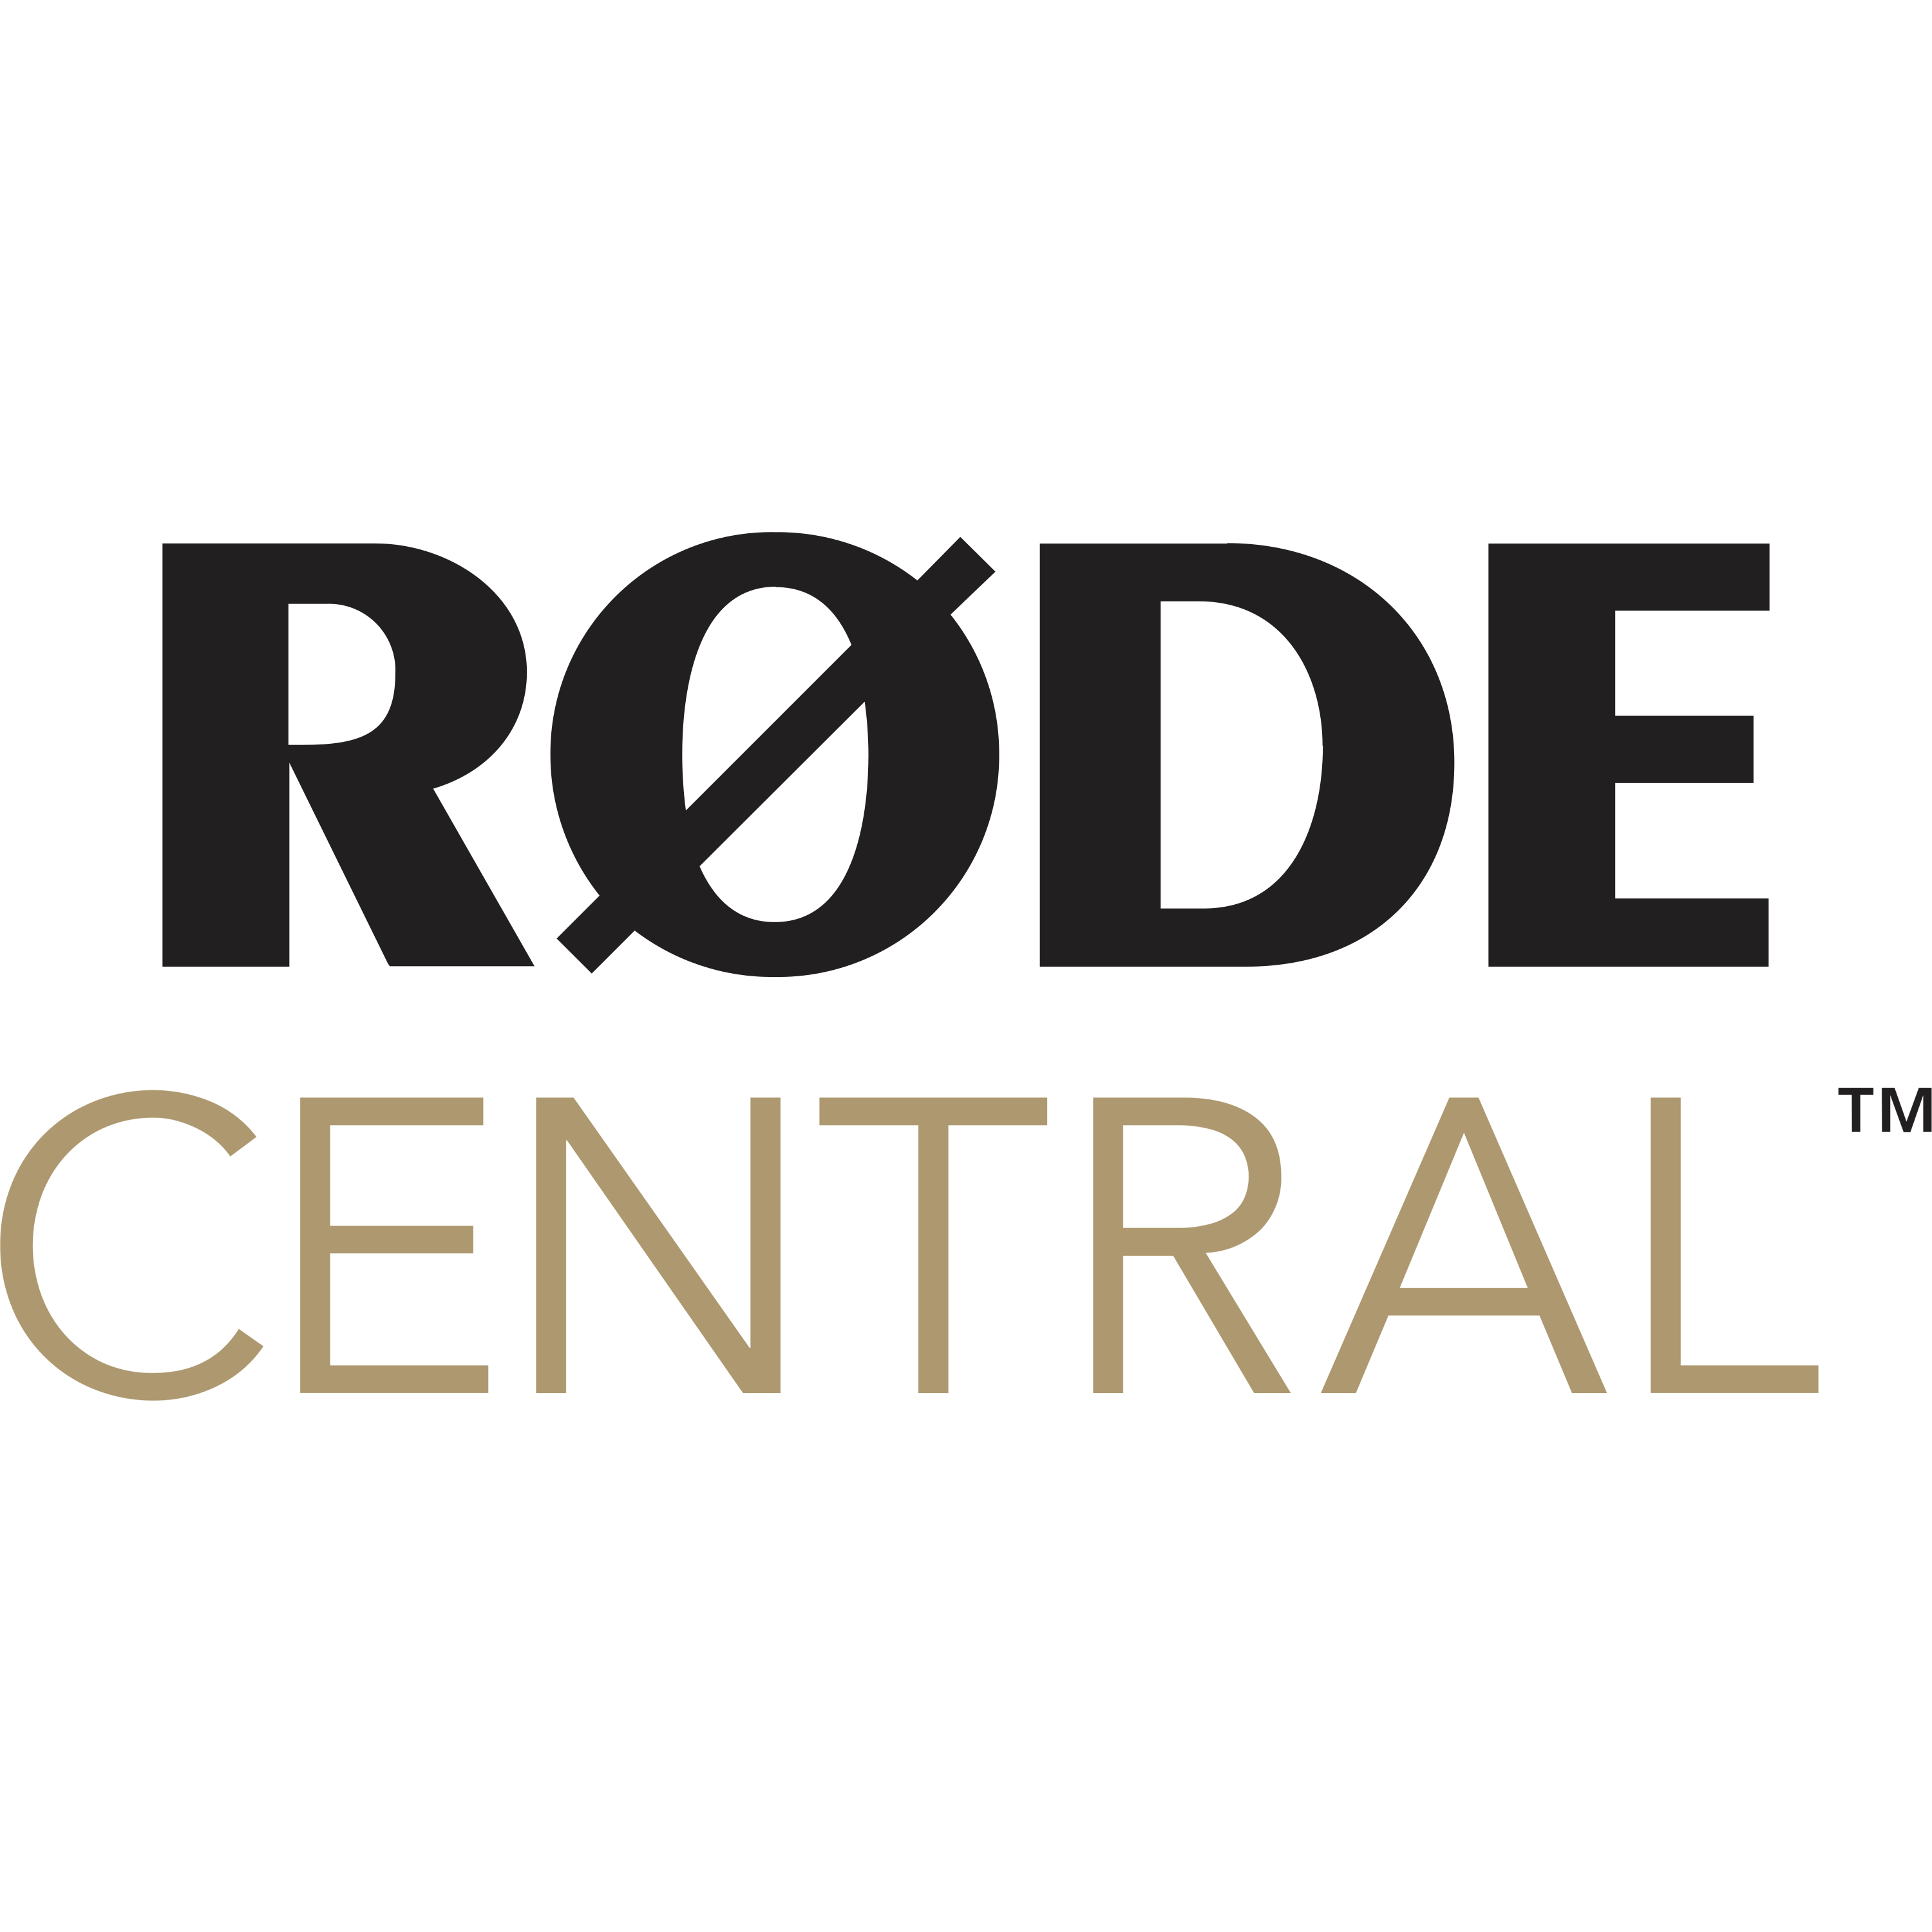 Rode Central Logo Transparent Picture